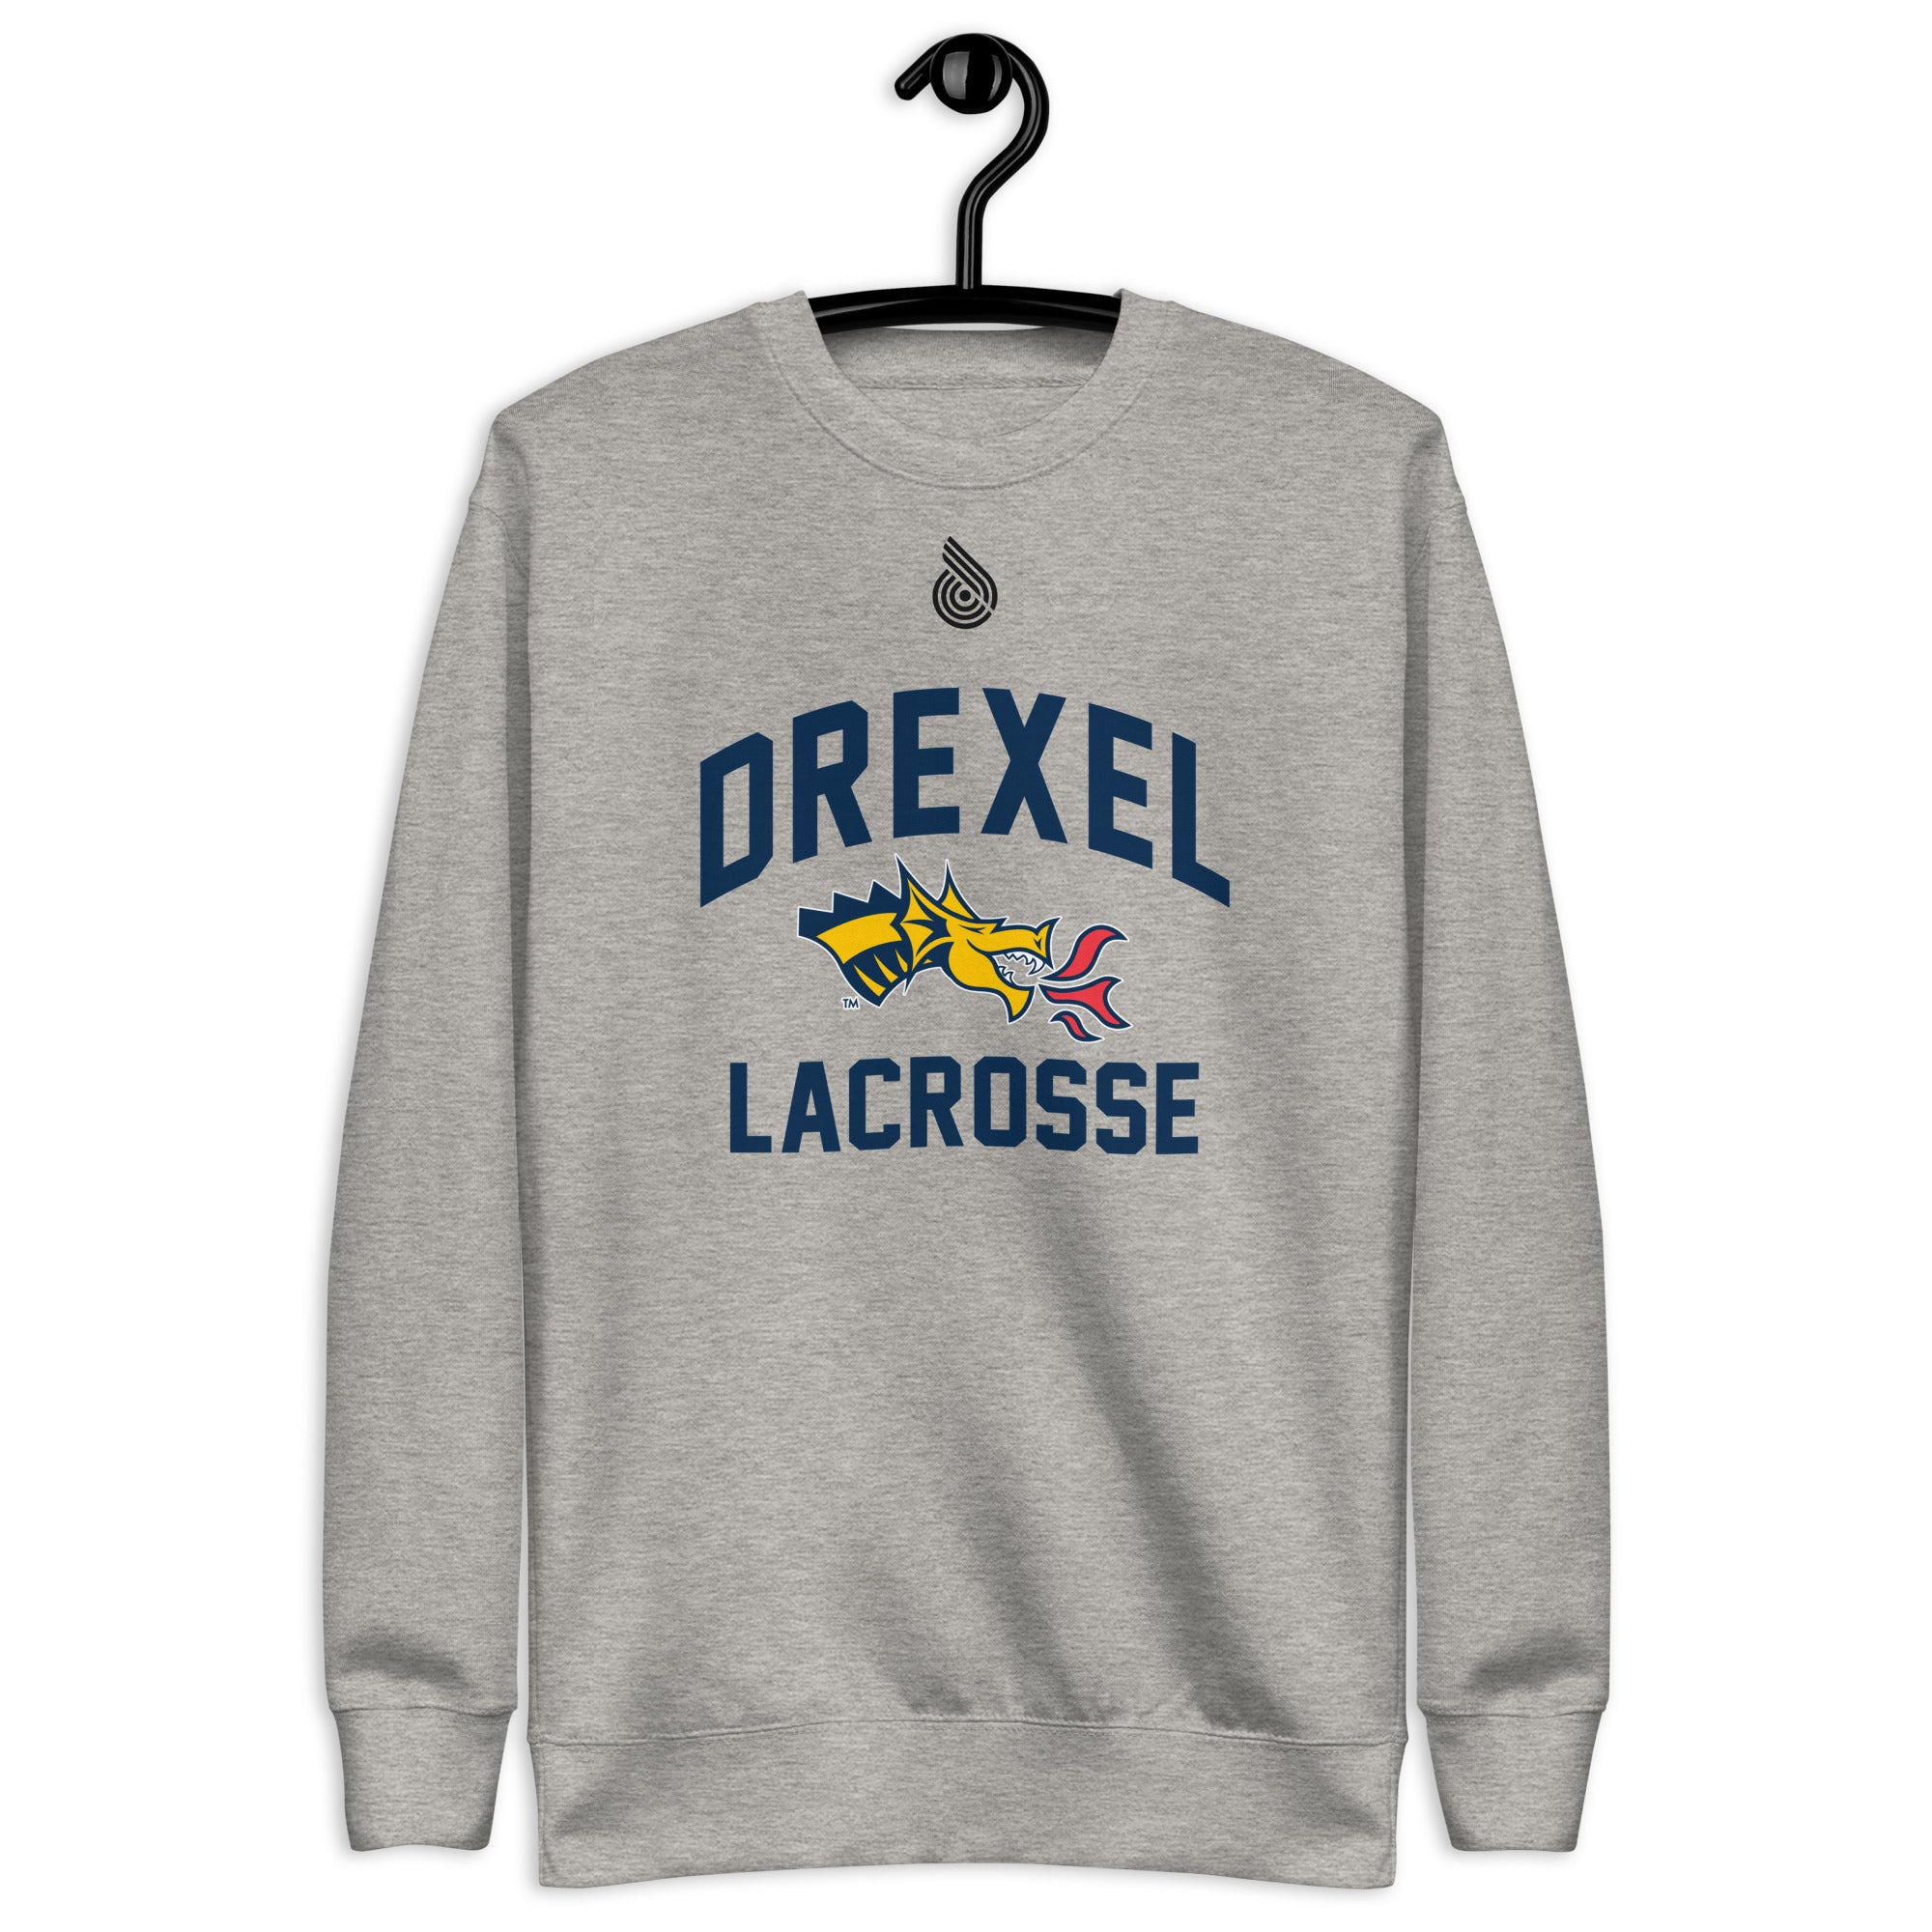 Drexel Unisex Premium Sweatshirt